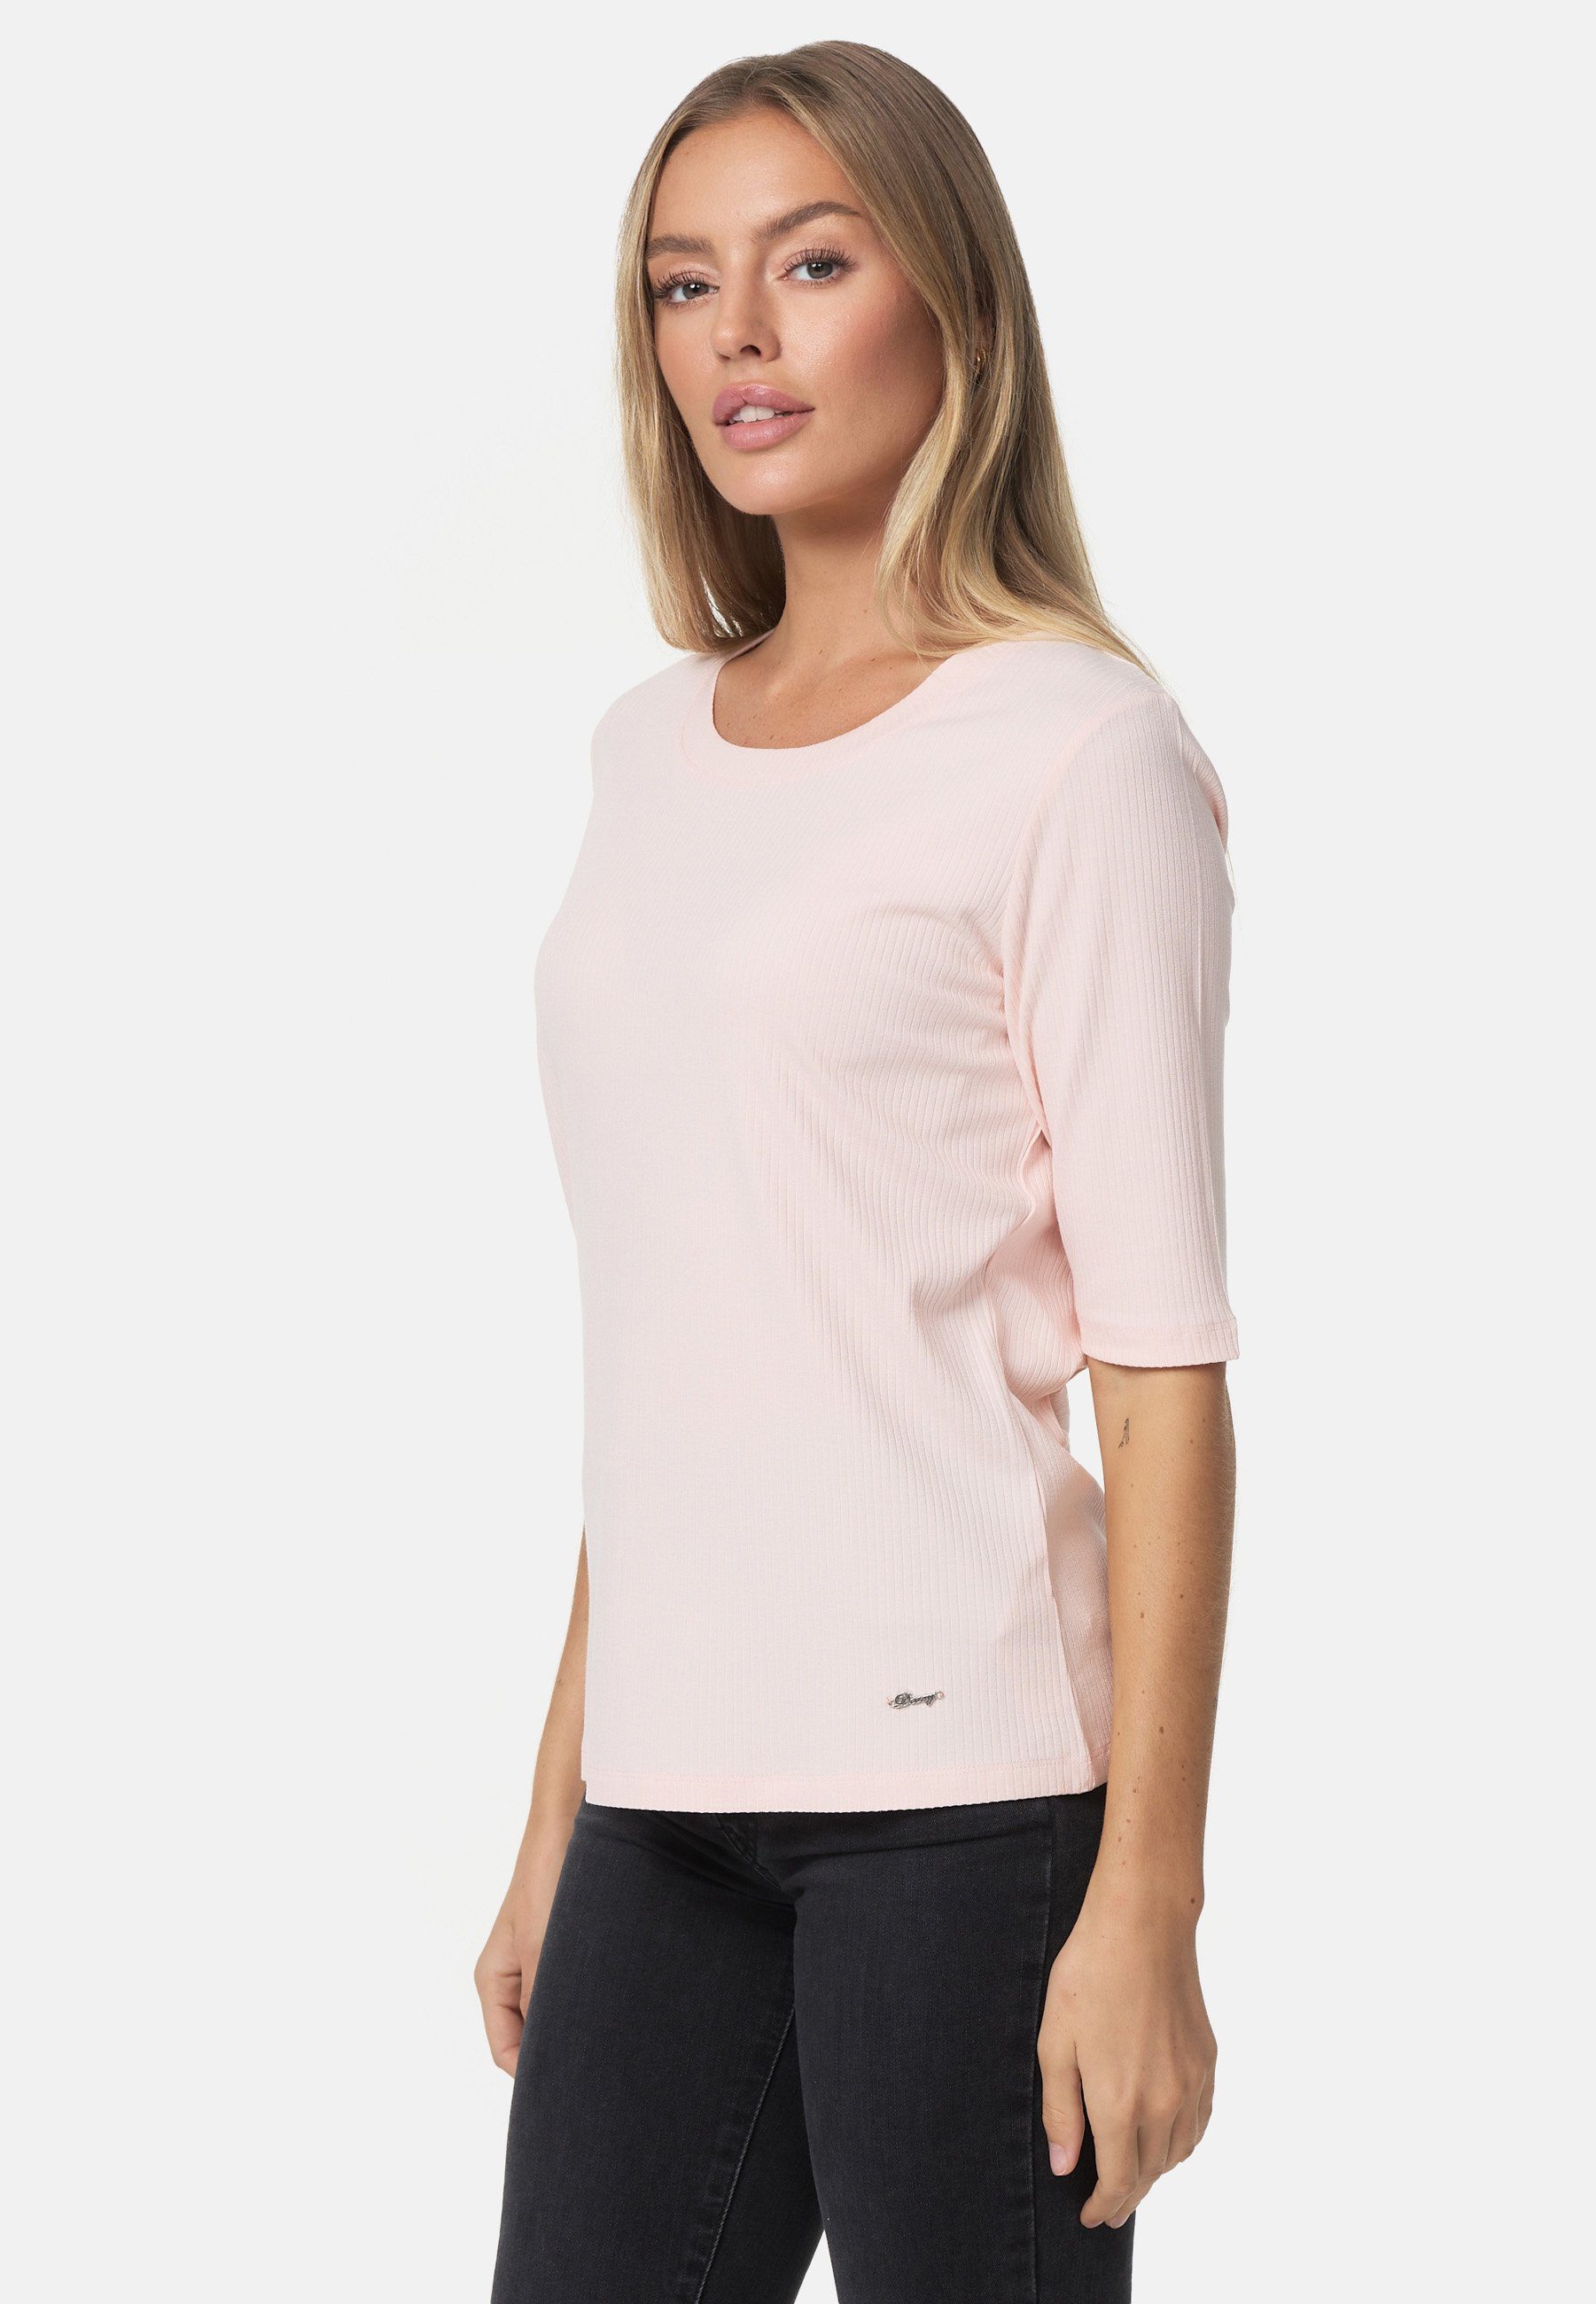 Decay T-Shirt mit halblangen Ärmeln rosa | T-Shirts